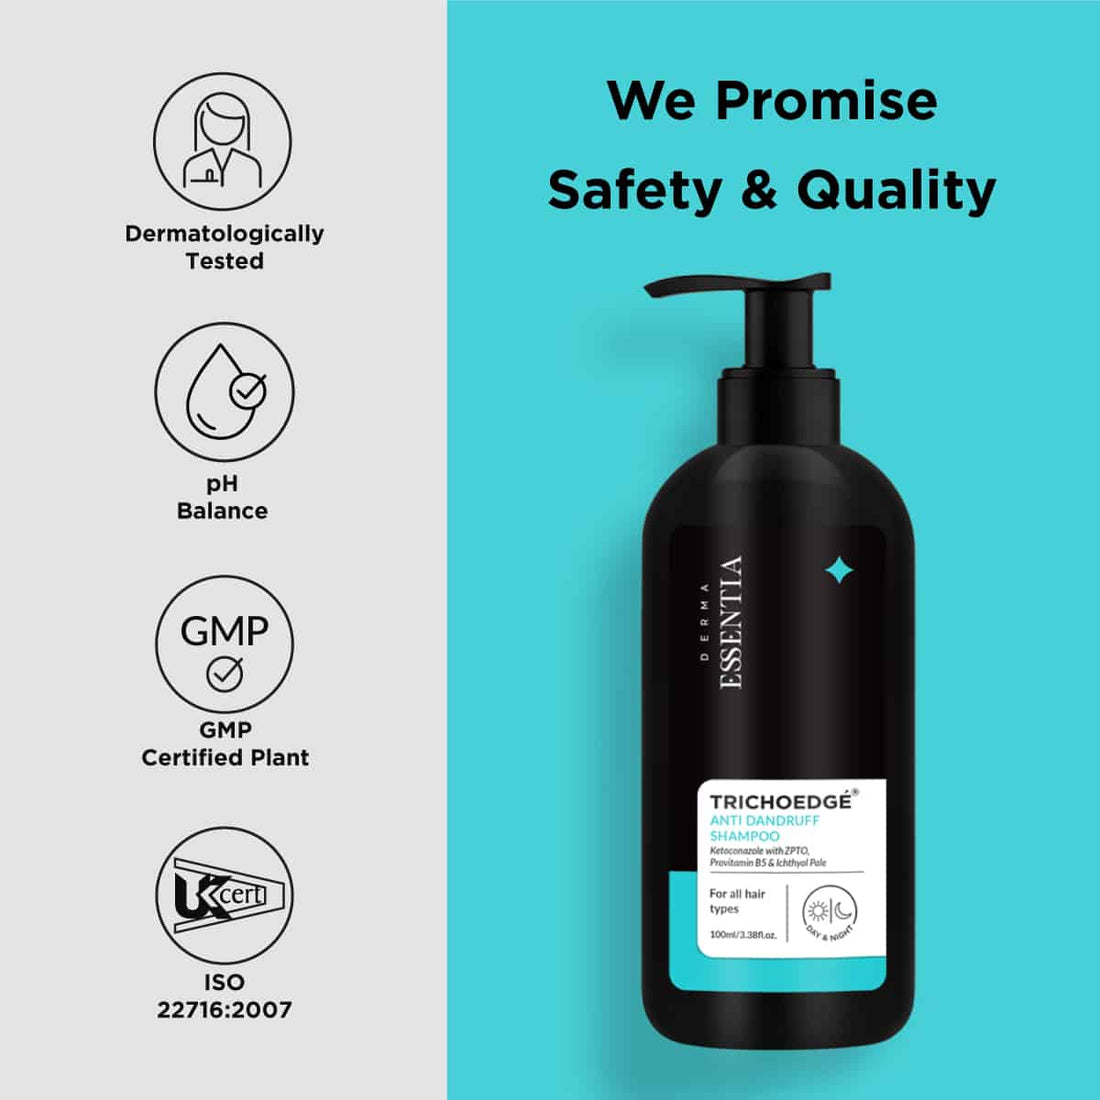 Anti Dandruff Shampoo  promise safety & Quality